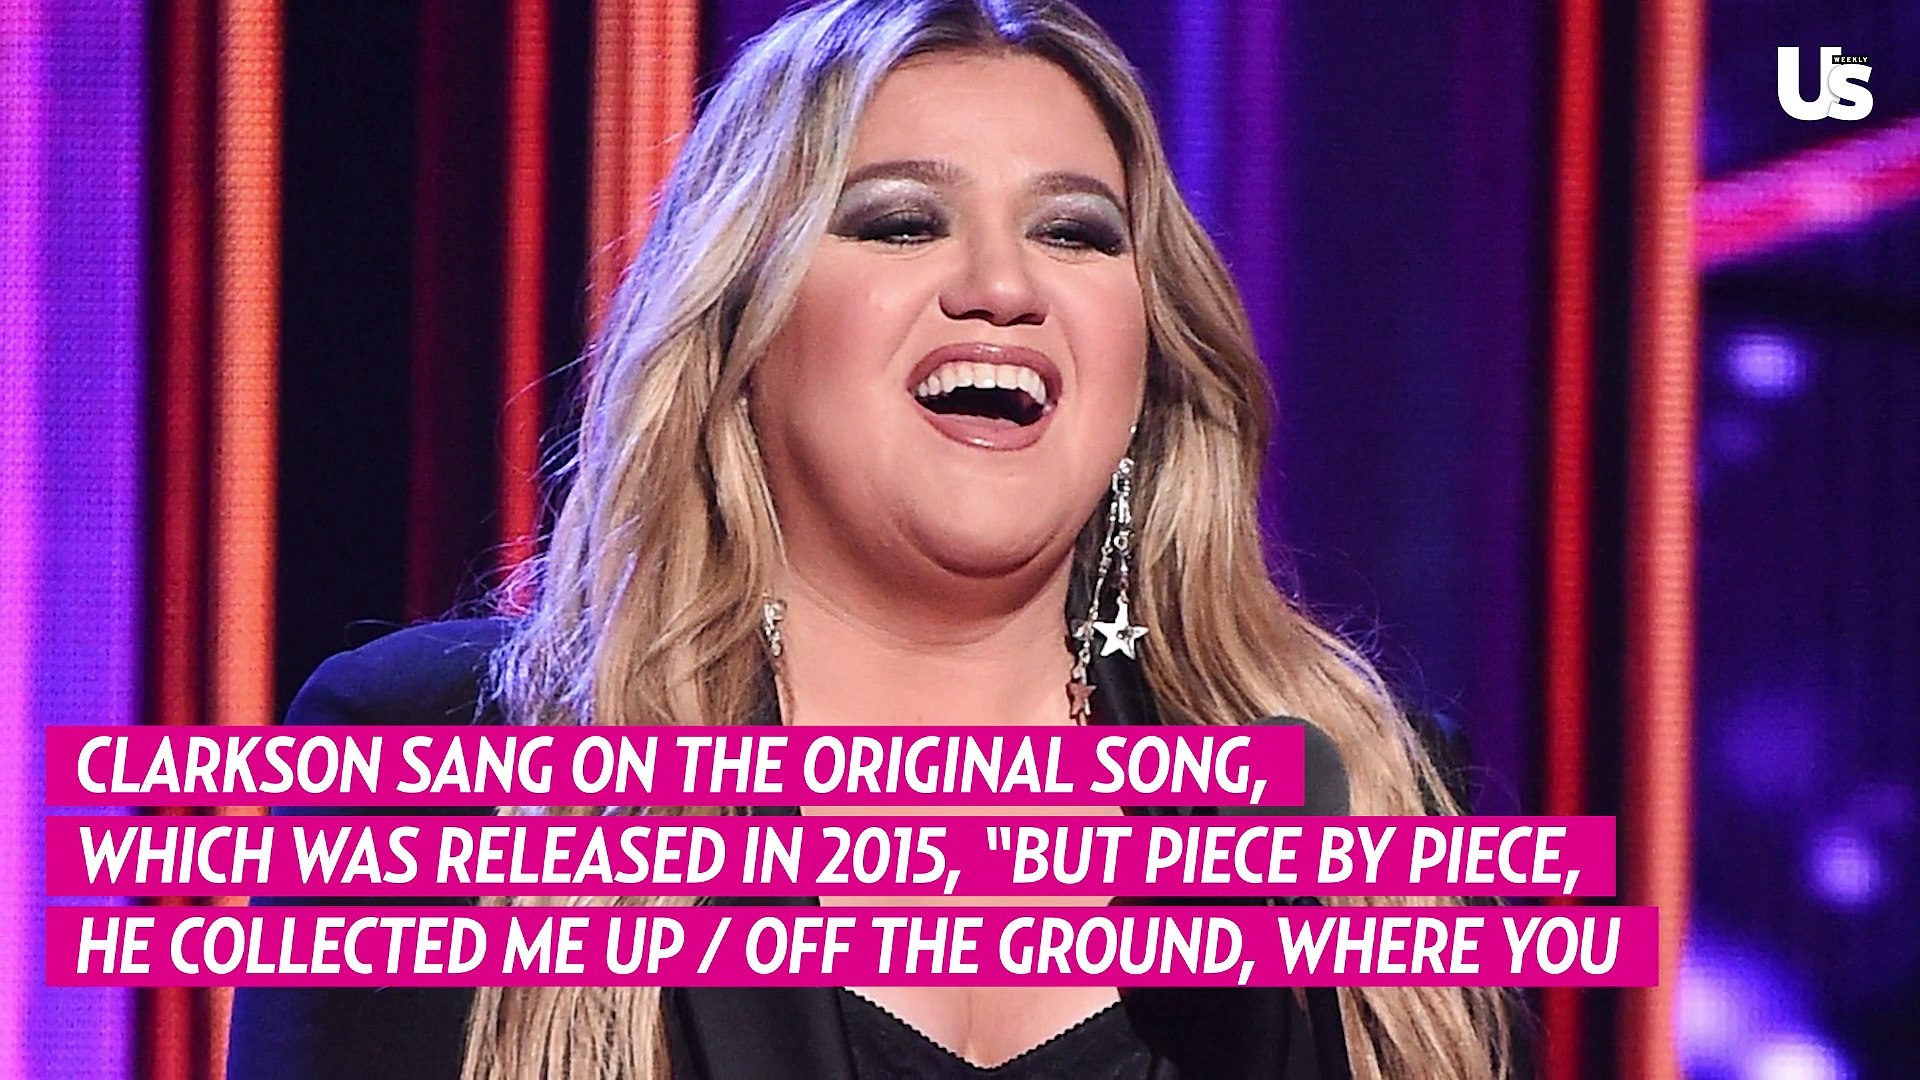 Kelly Clarkson New Piece by Piece Lyrics vs Original: Brandon